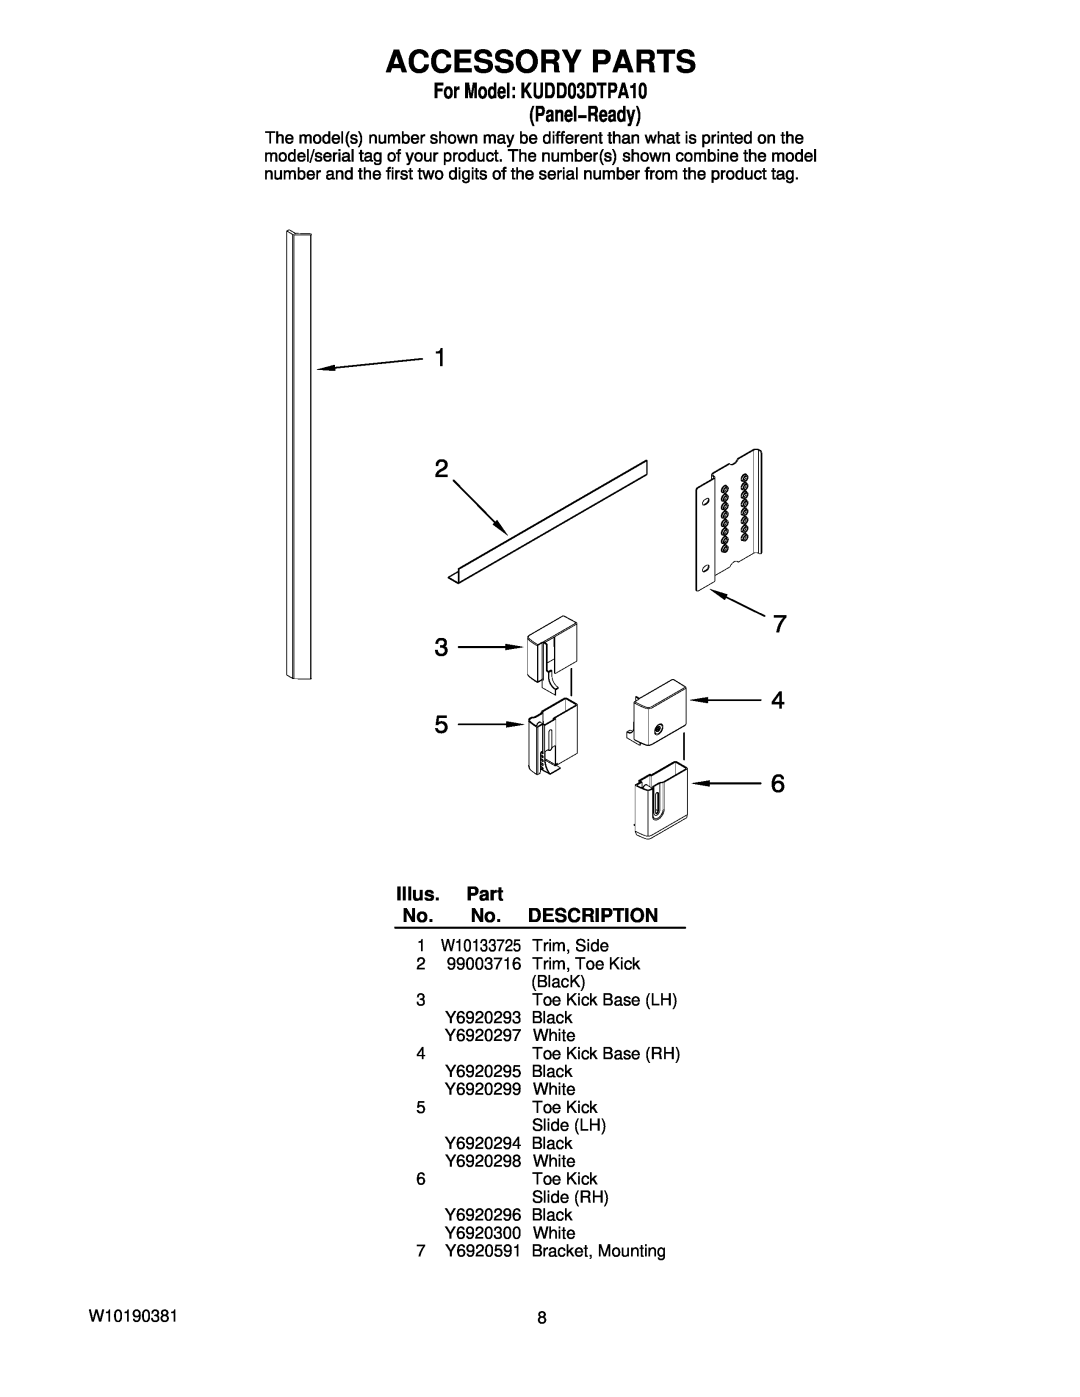 KitchenAid manual Accessory Parts, Illus. Part No. No. DESCRIPTION, For Model KUDD03DTPA10 Panel−Ready 